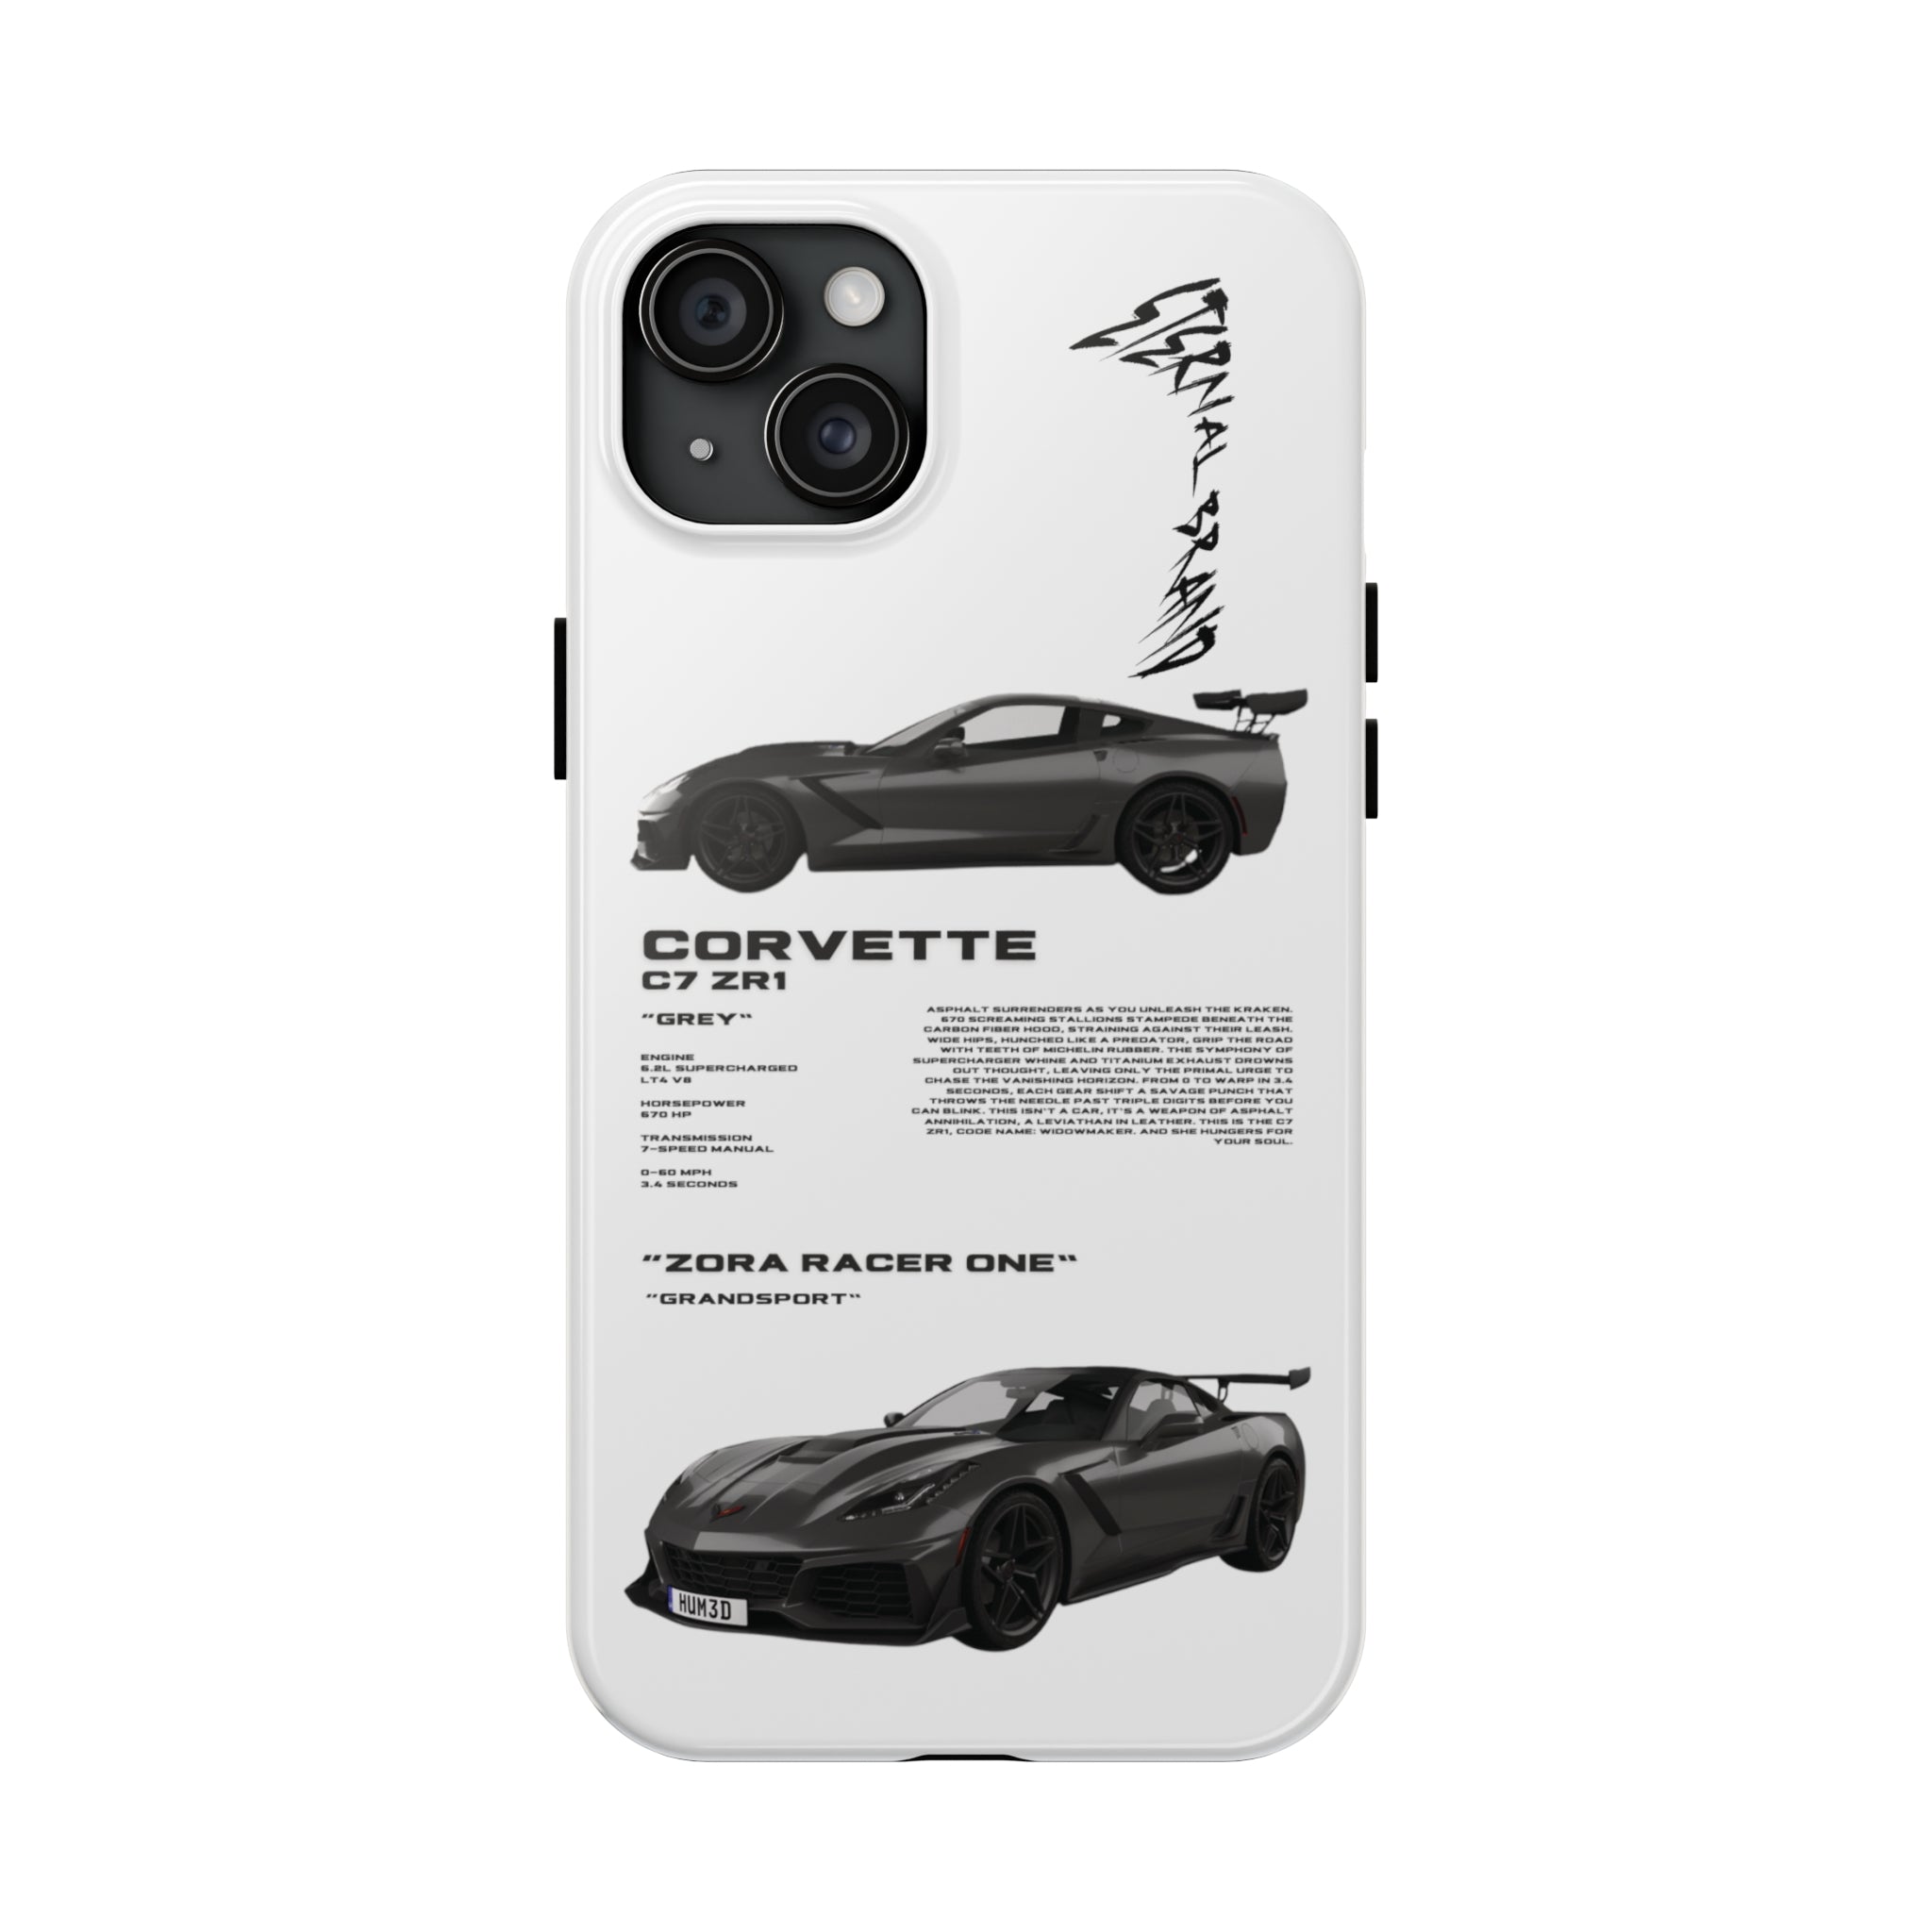 Corvette C7 ZR1